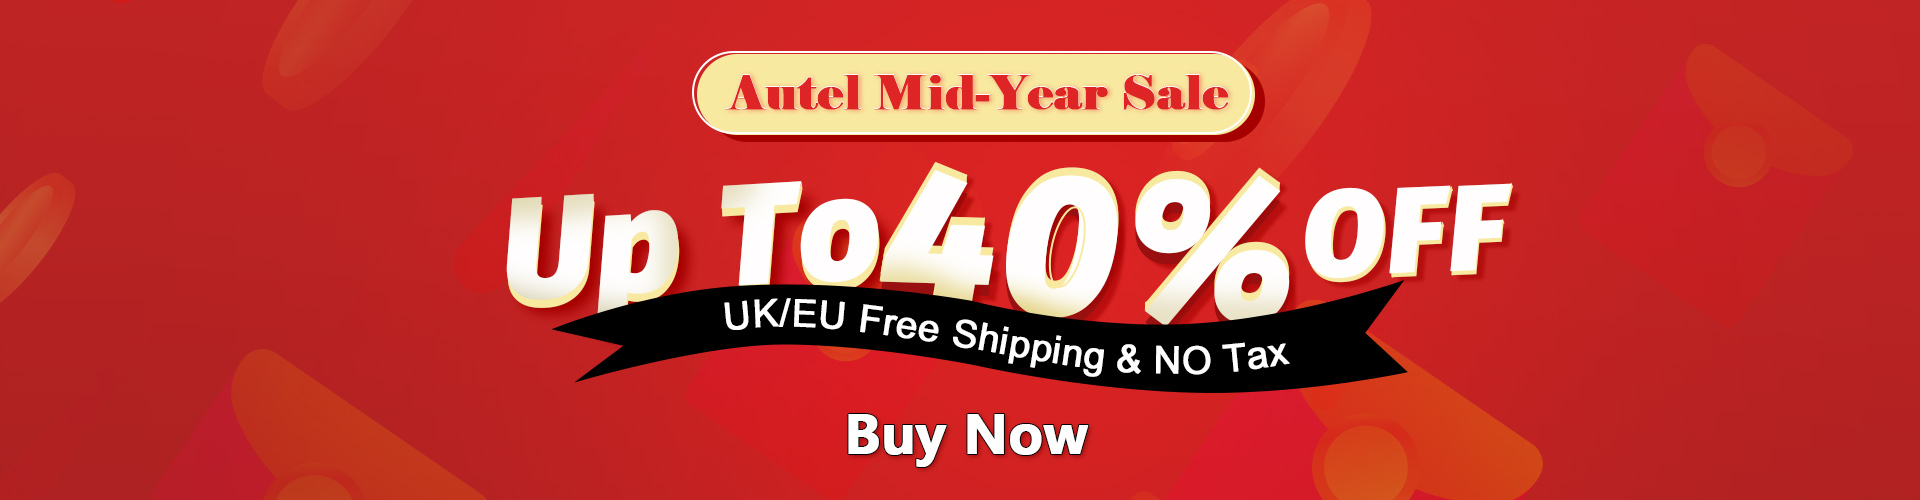 Autel Mid-Year Sale